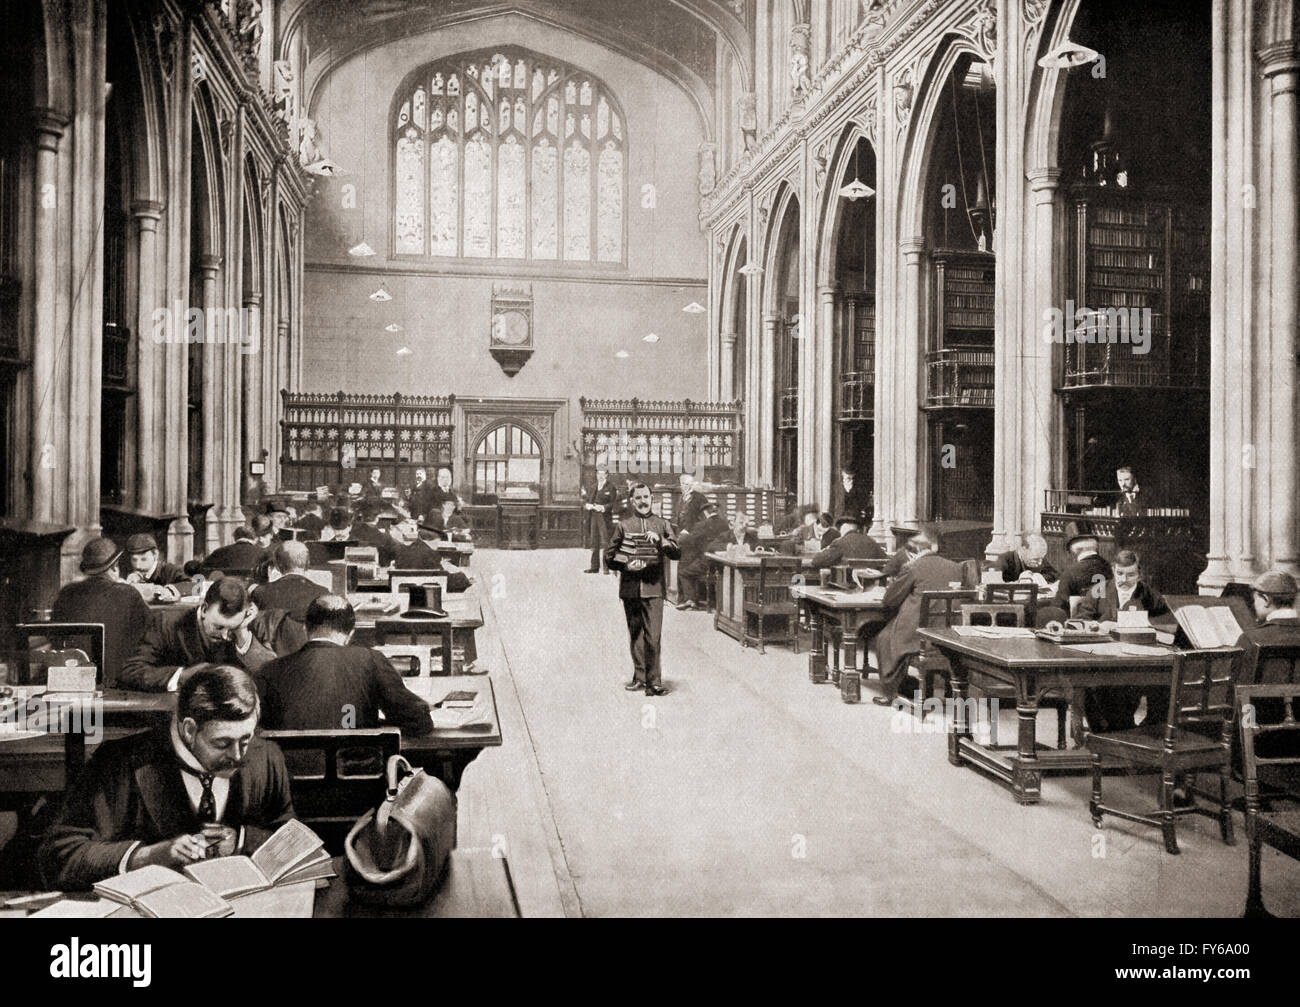 Der Lesesaal, Guildhall Library, London, England im frühen 20. Jahrhundert. Stockfoto